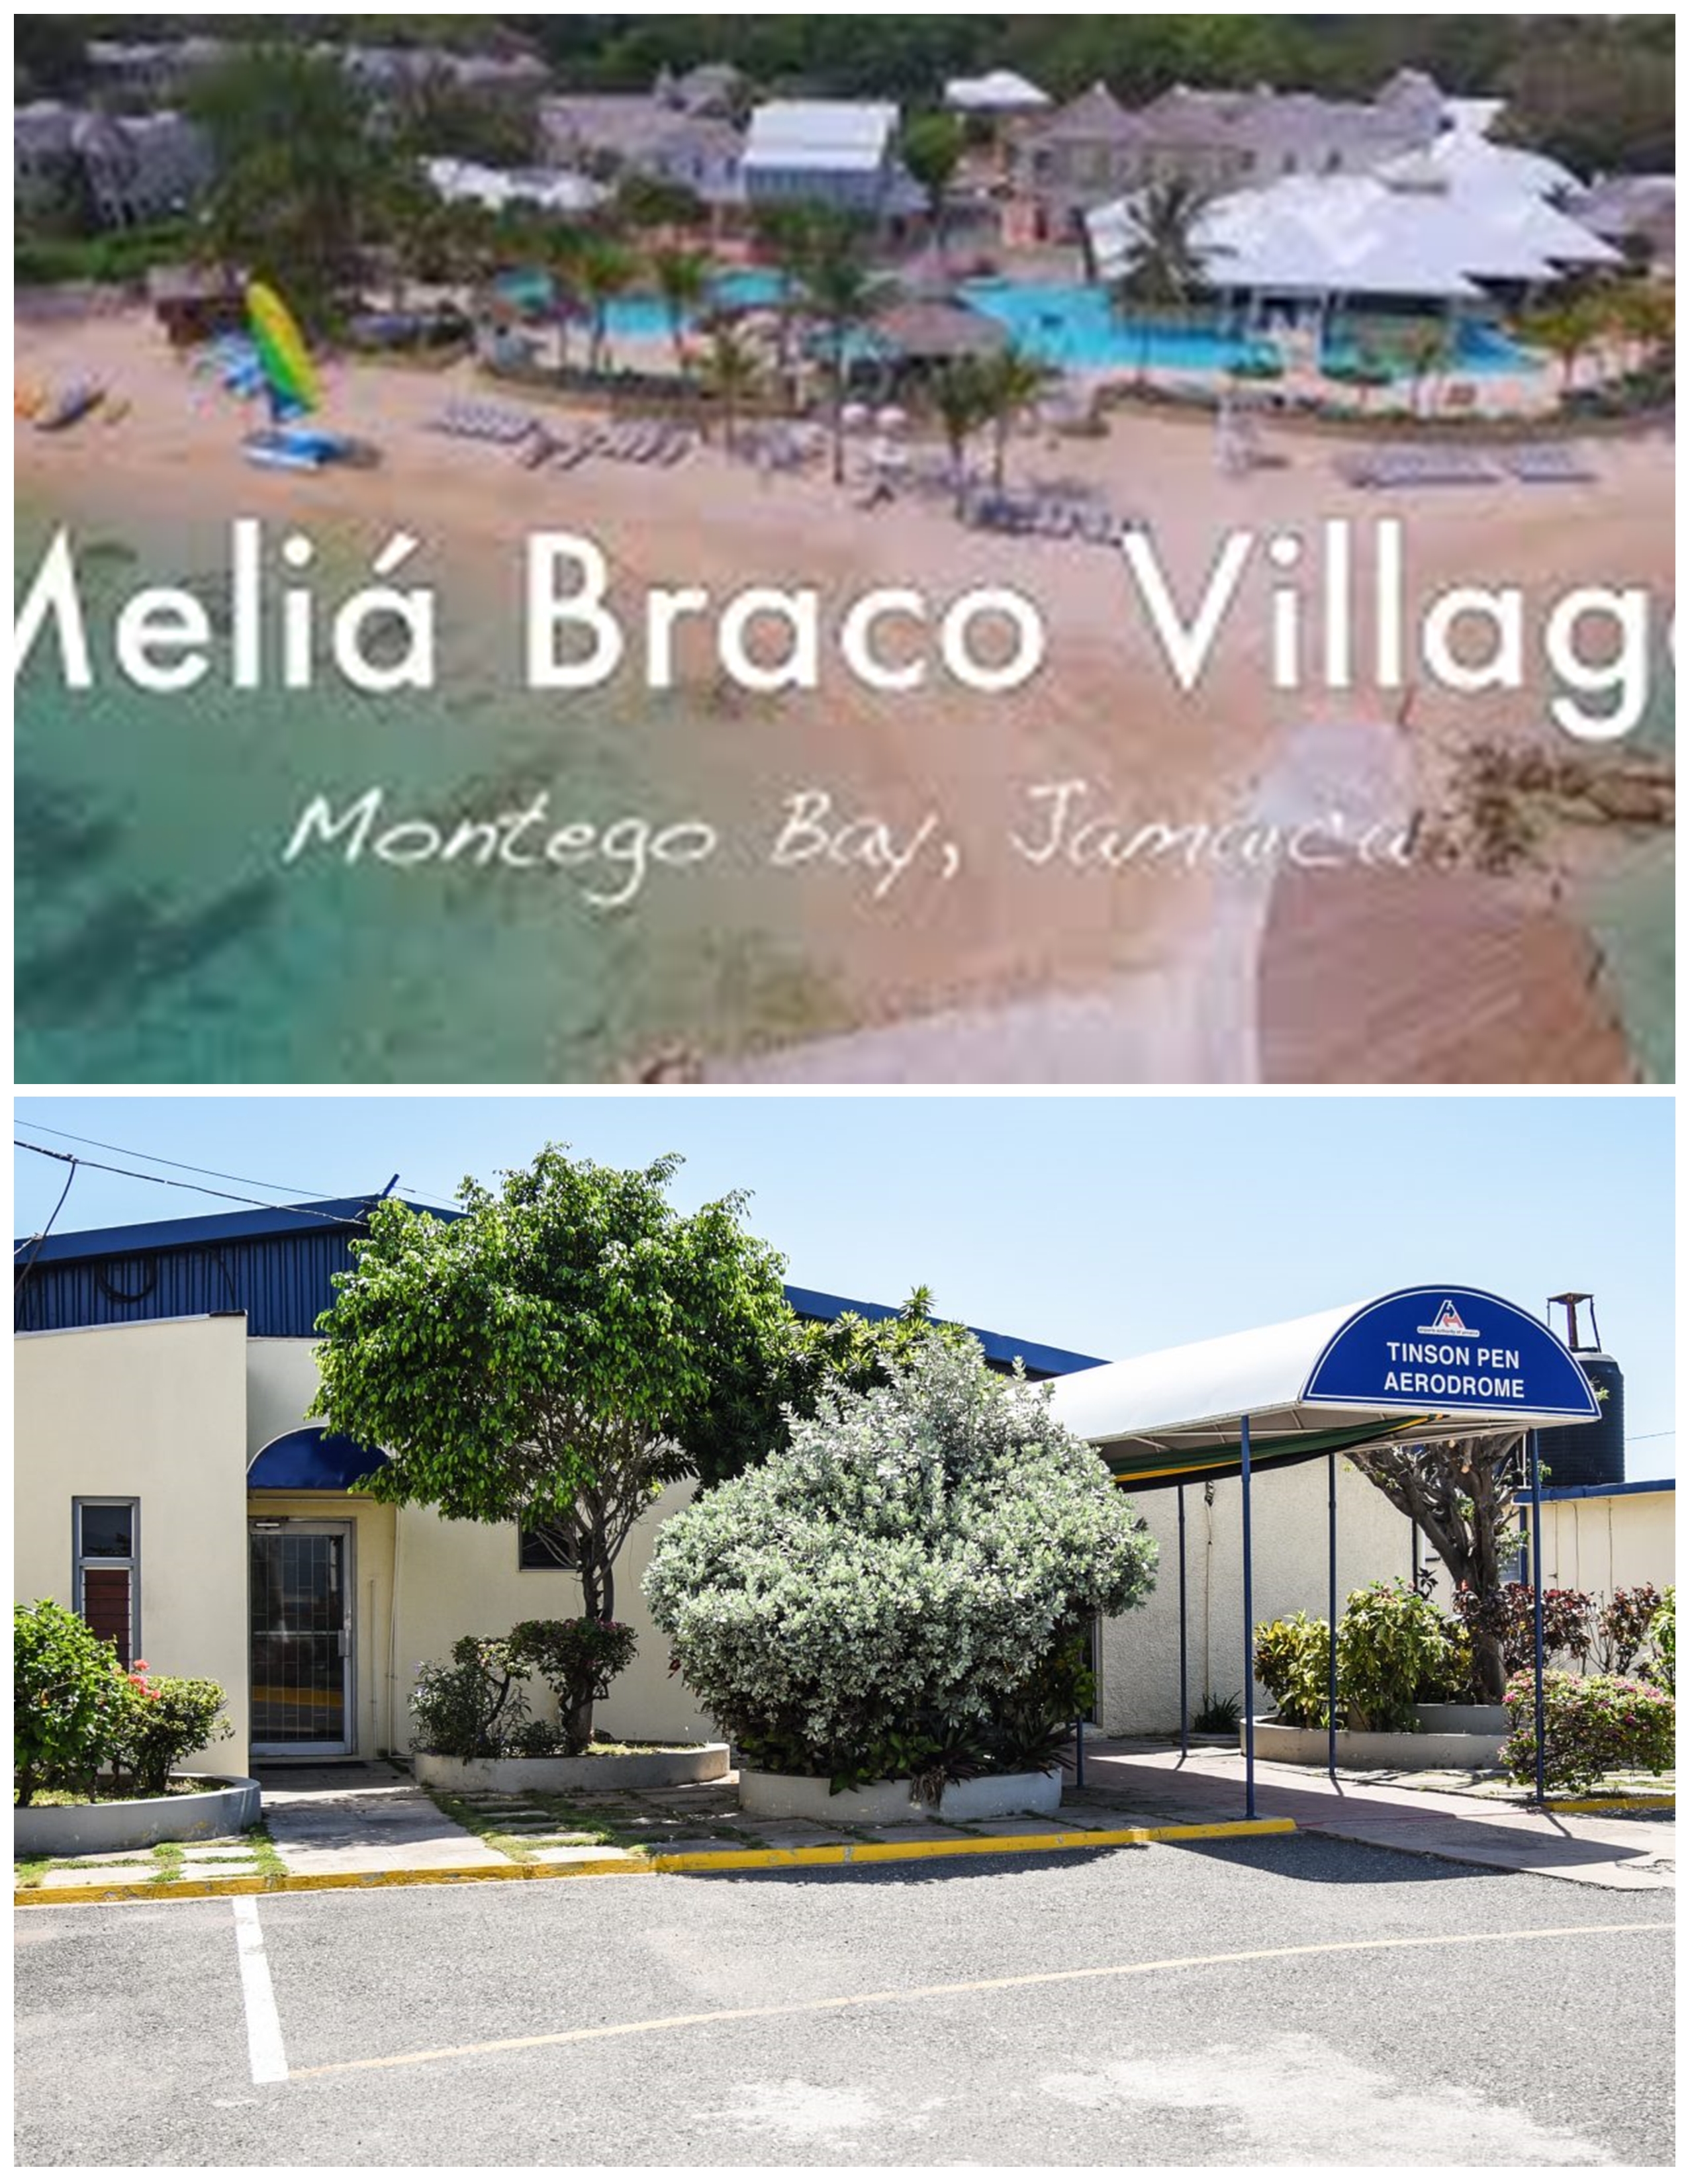 Melia Braco Village - Tinson Pen Aerodrome